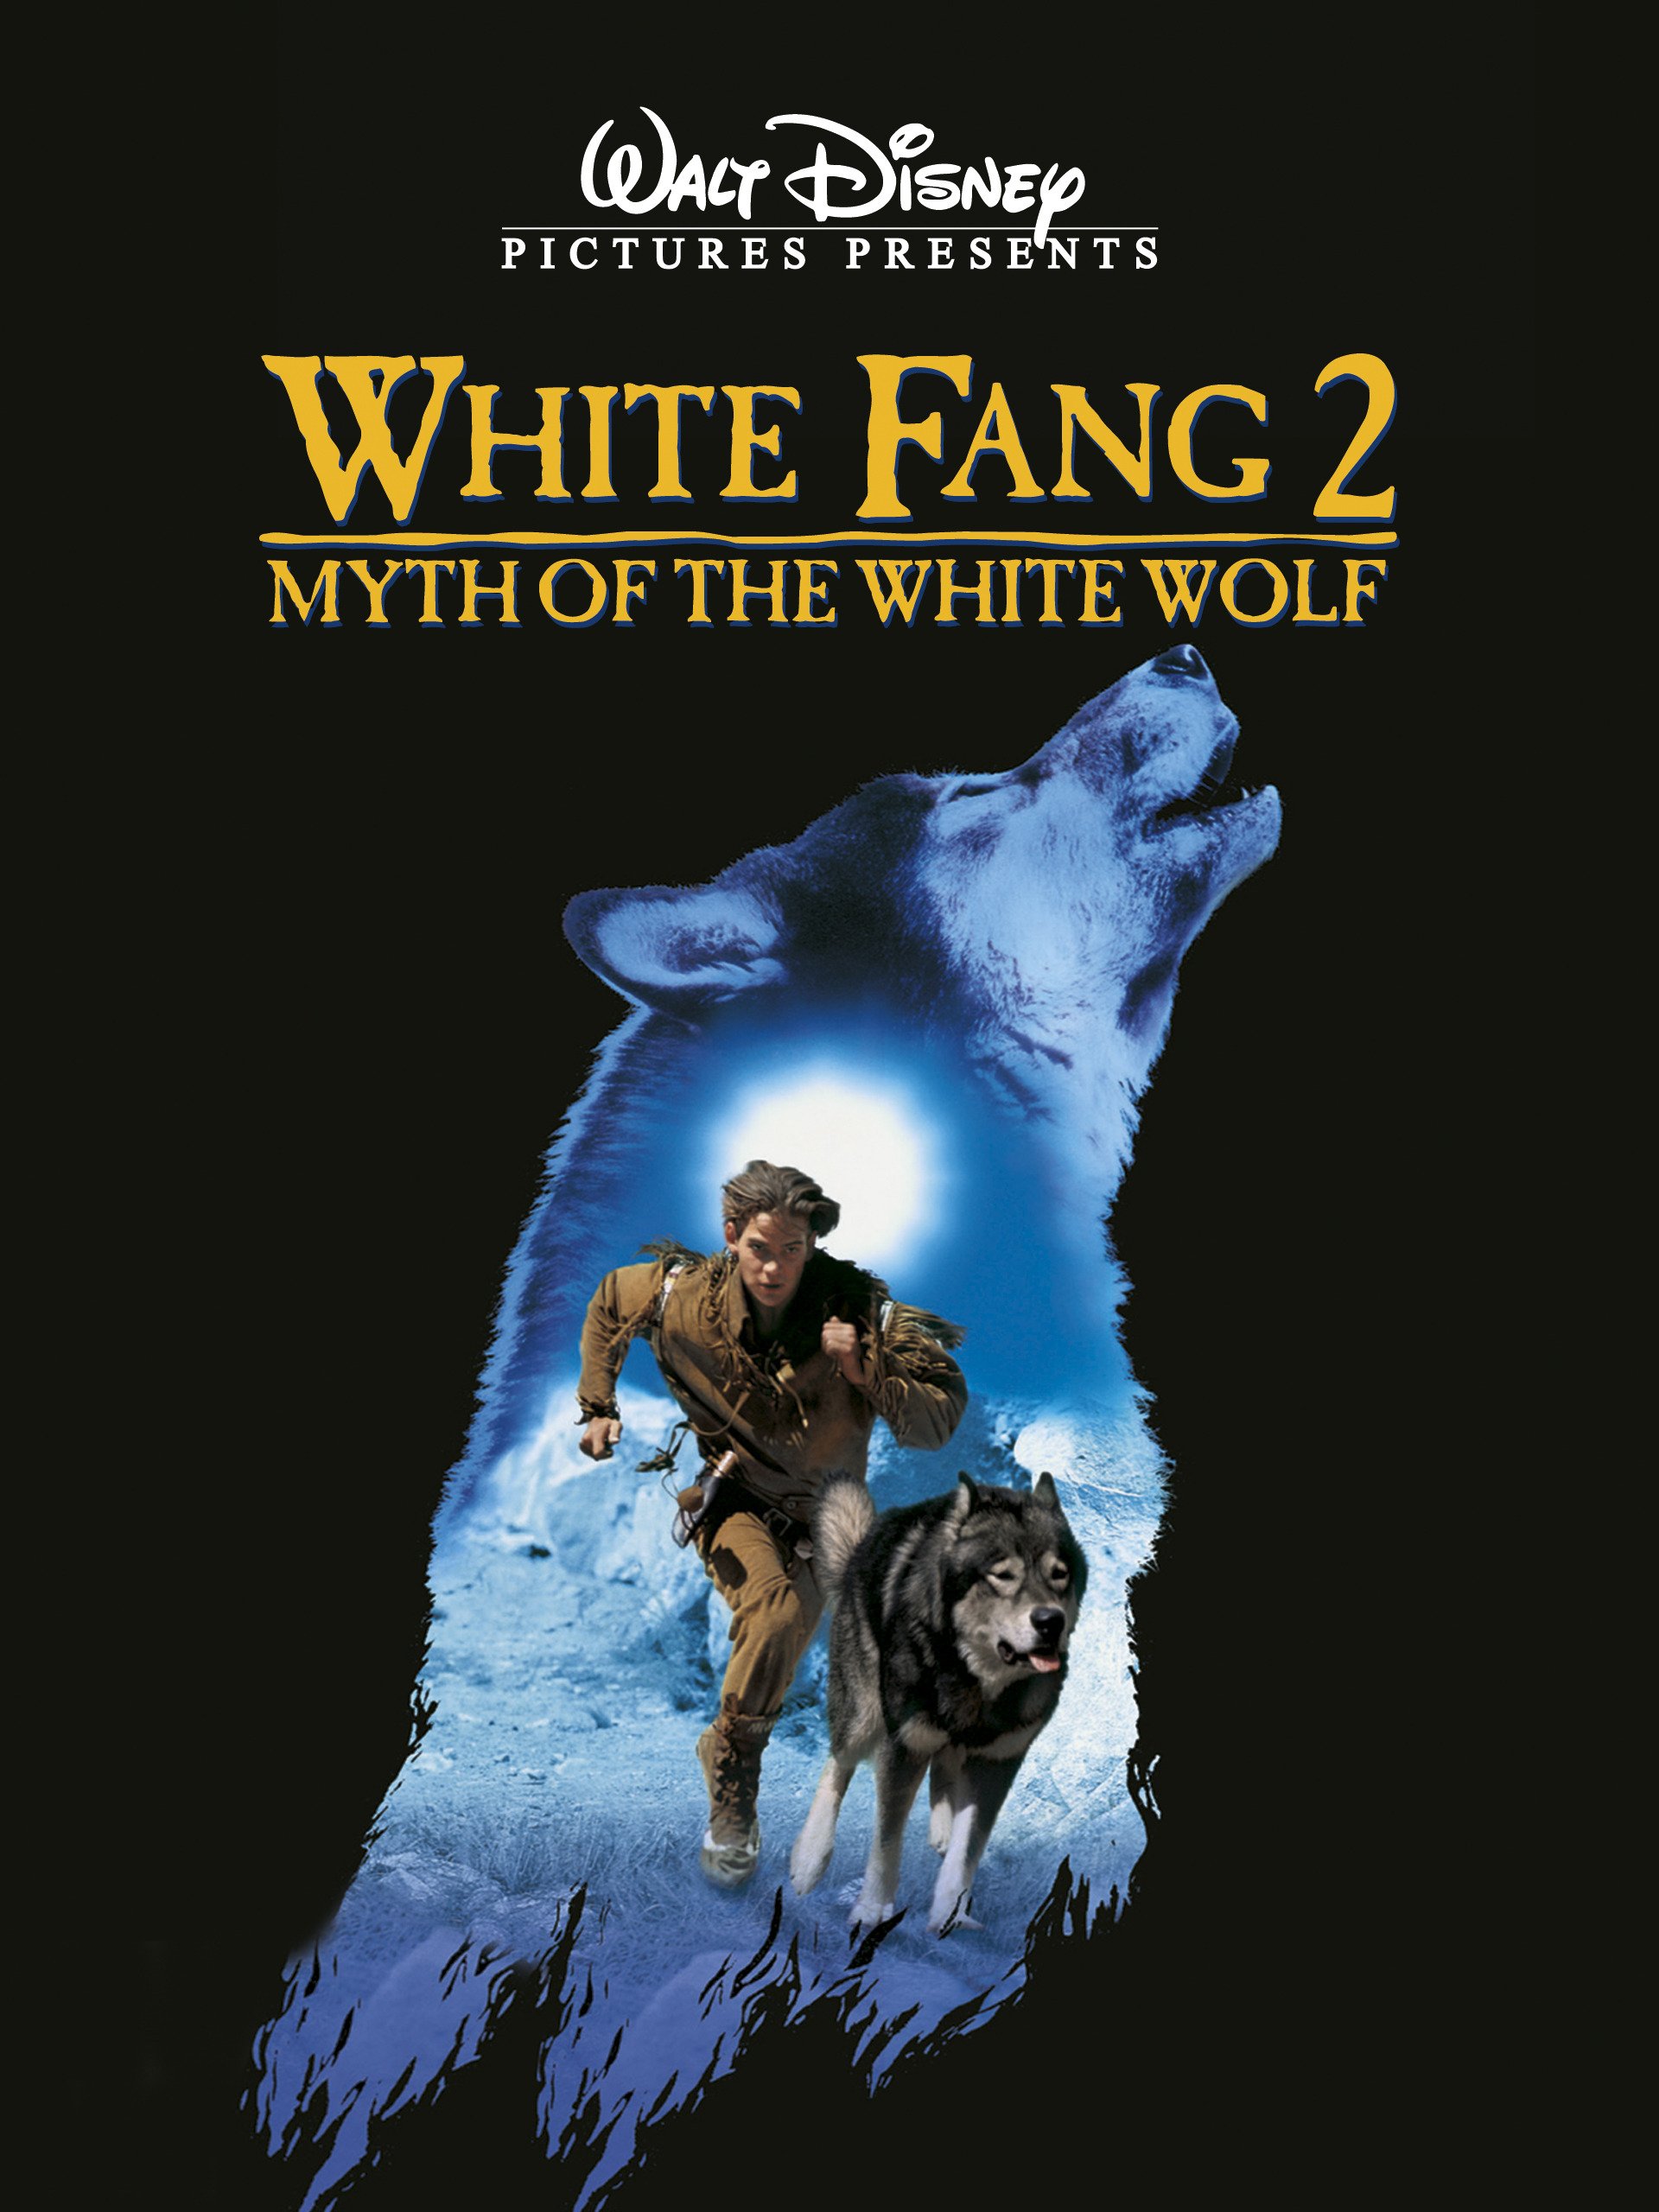 Wolf (1994 film) - Wikipedia